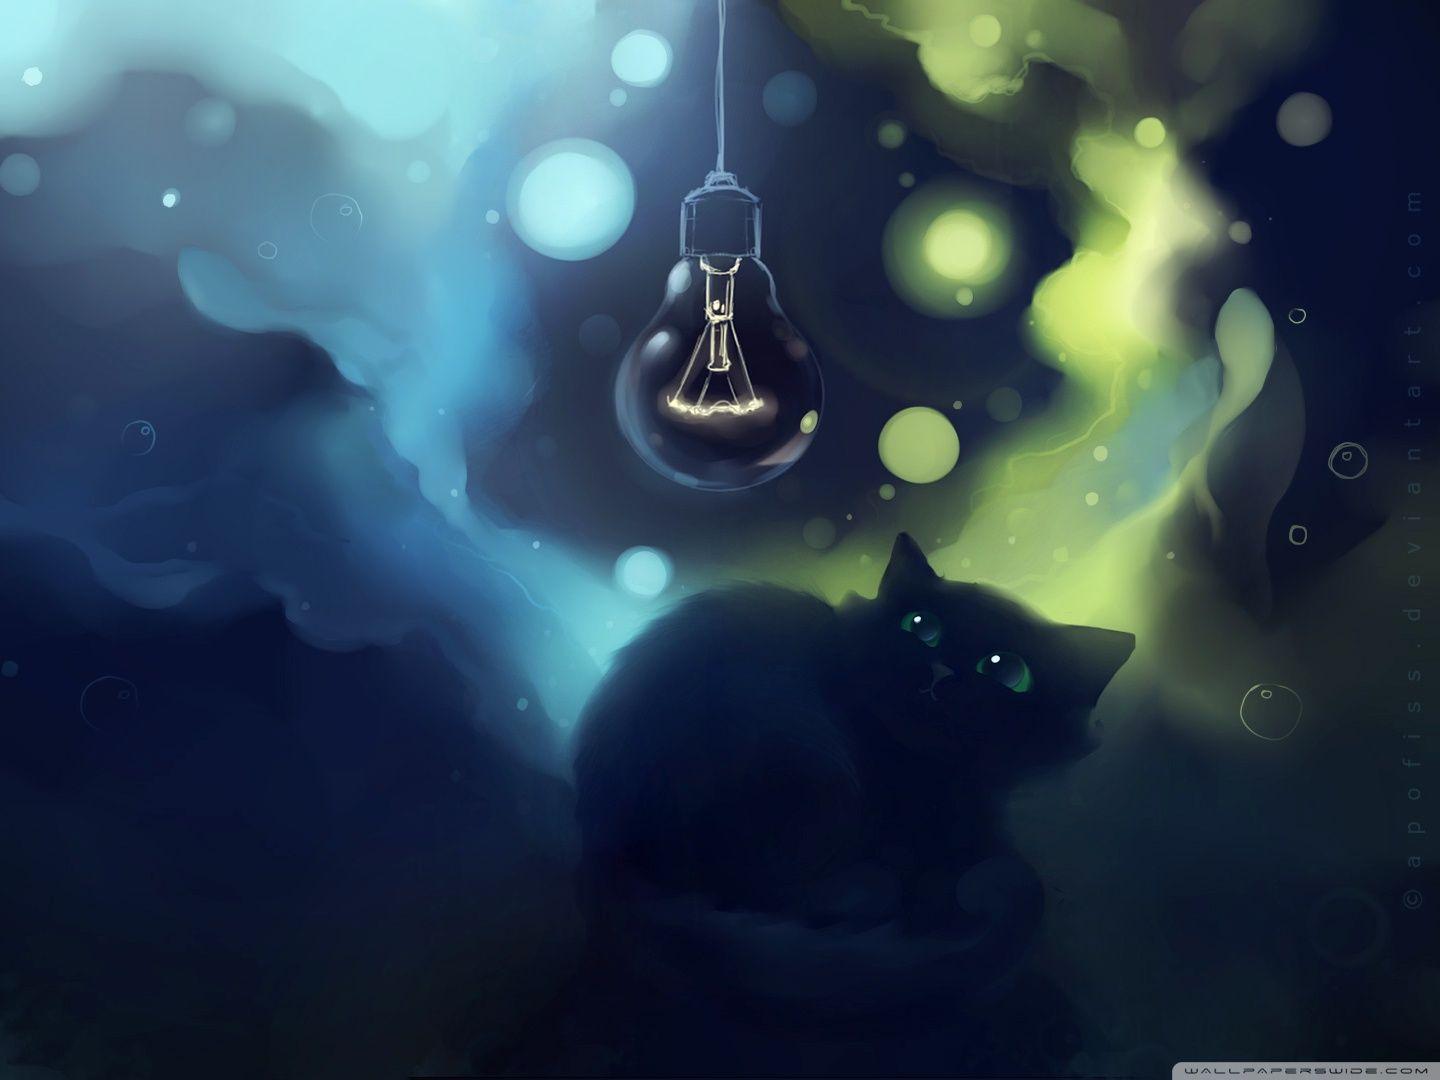 Black Cat Scared Painting HD desktop wallpaper, Widescreen, High